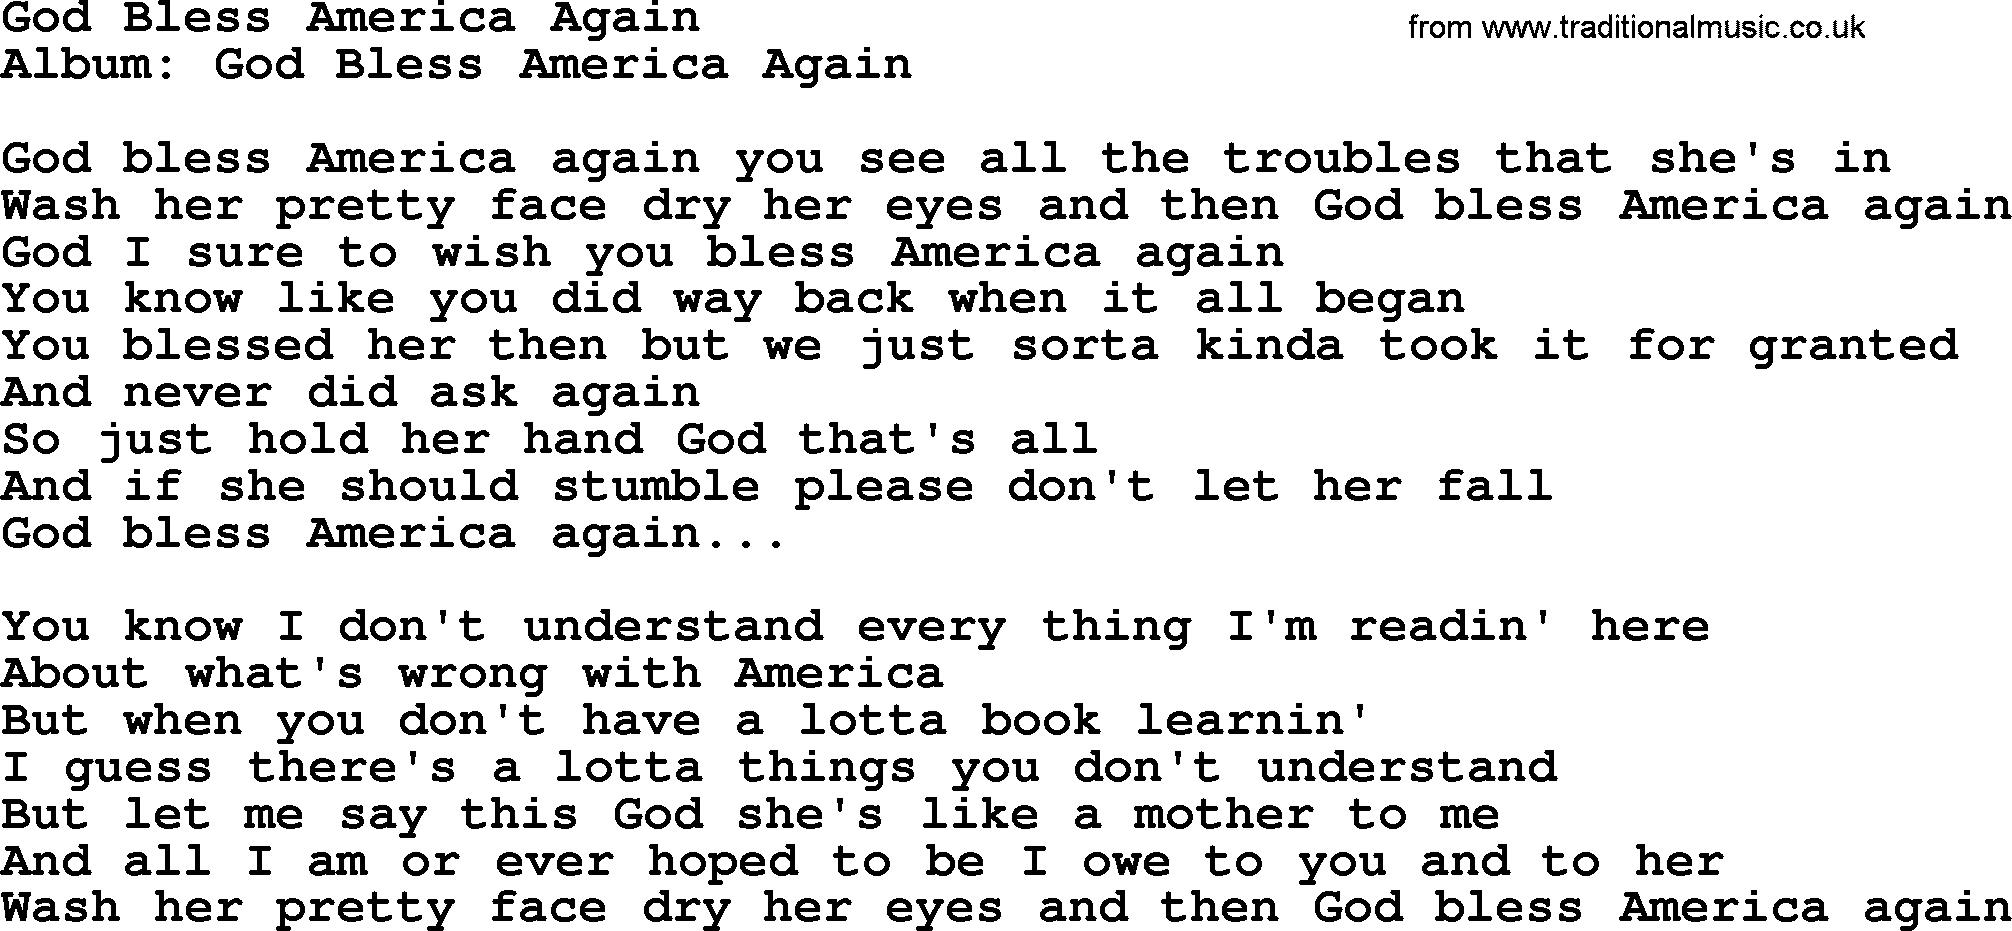 Loretta Lynn song: God Bless America Again lyrics